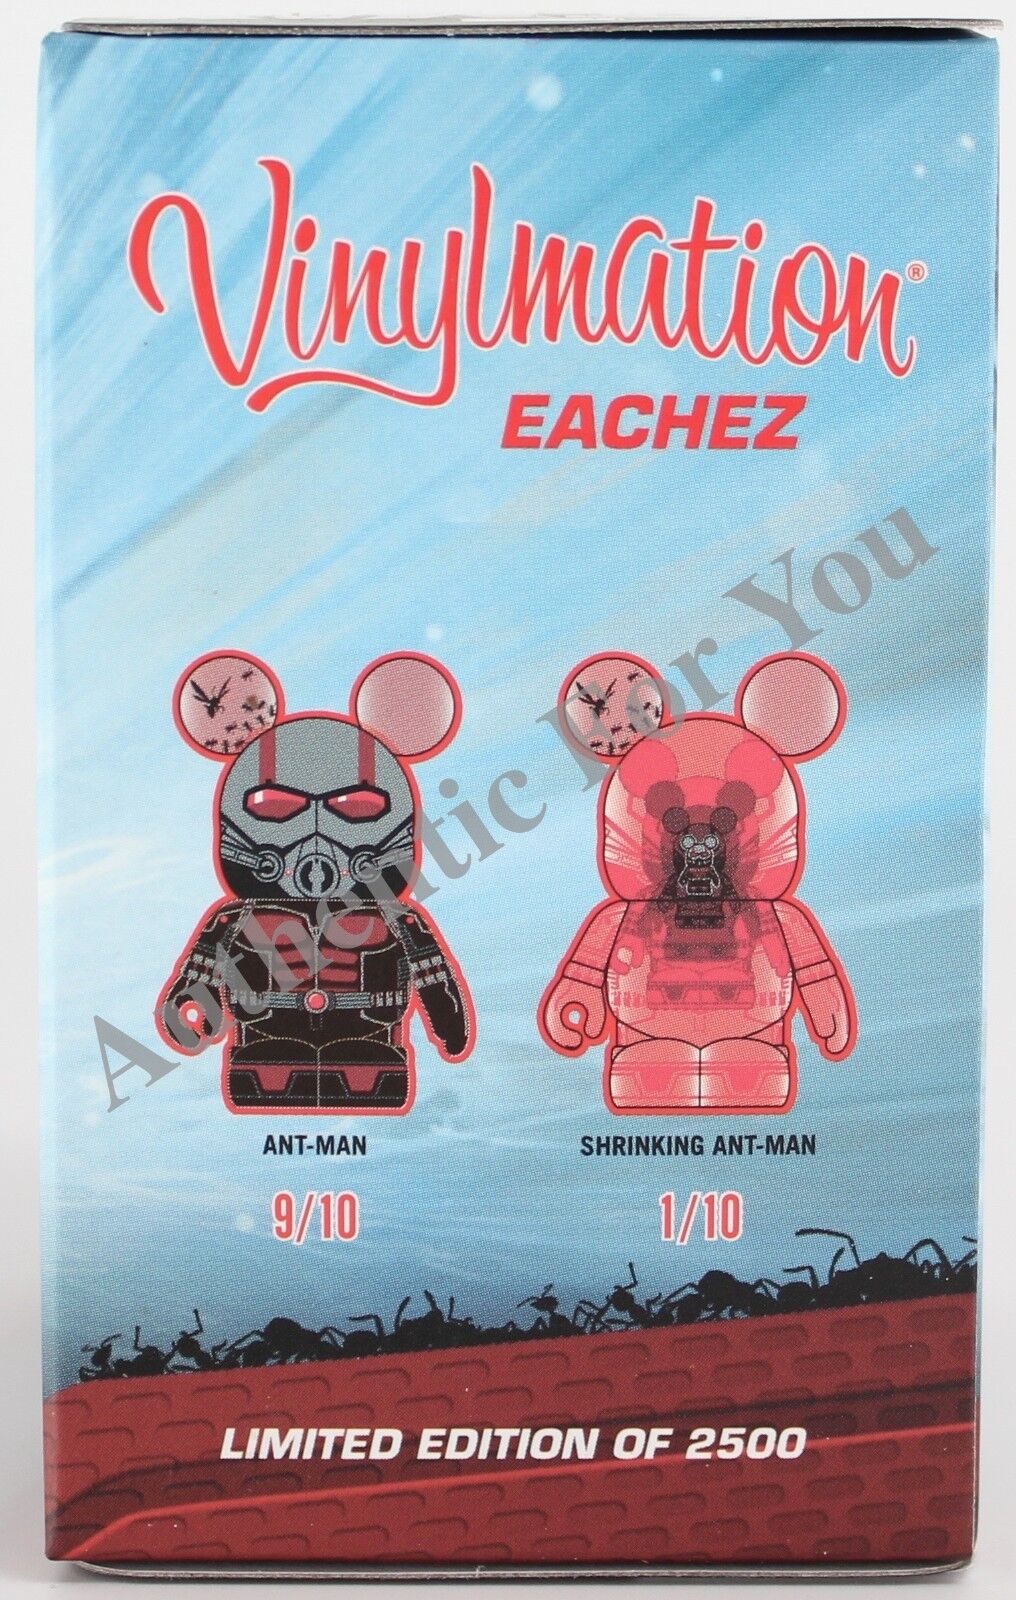 New Disney Marvel Vinylmation Ant-Man Eachez Sealed Blind Box - Variant?